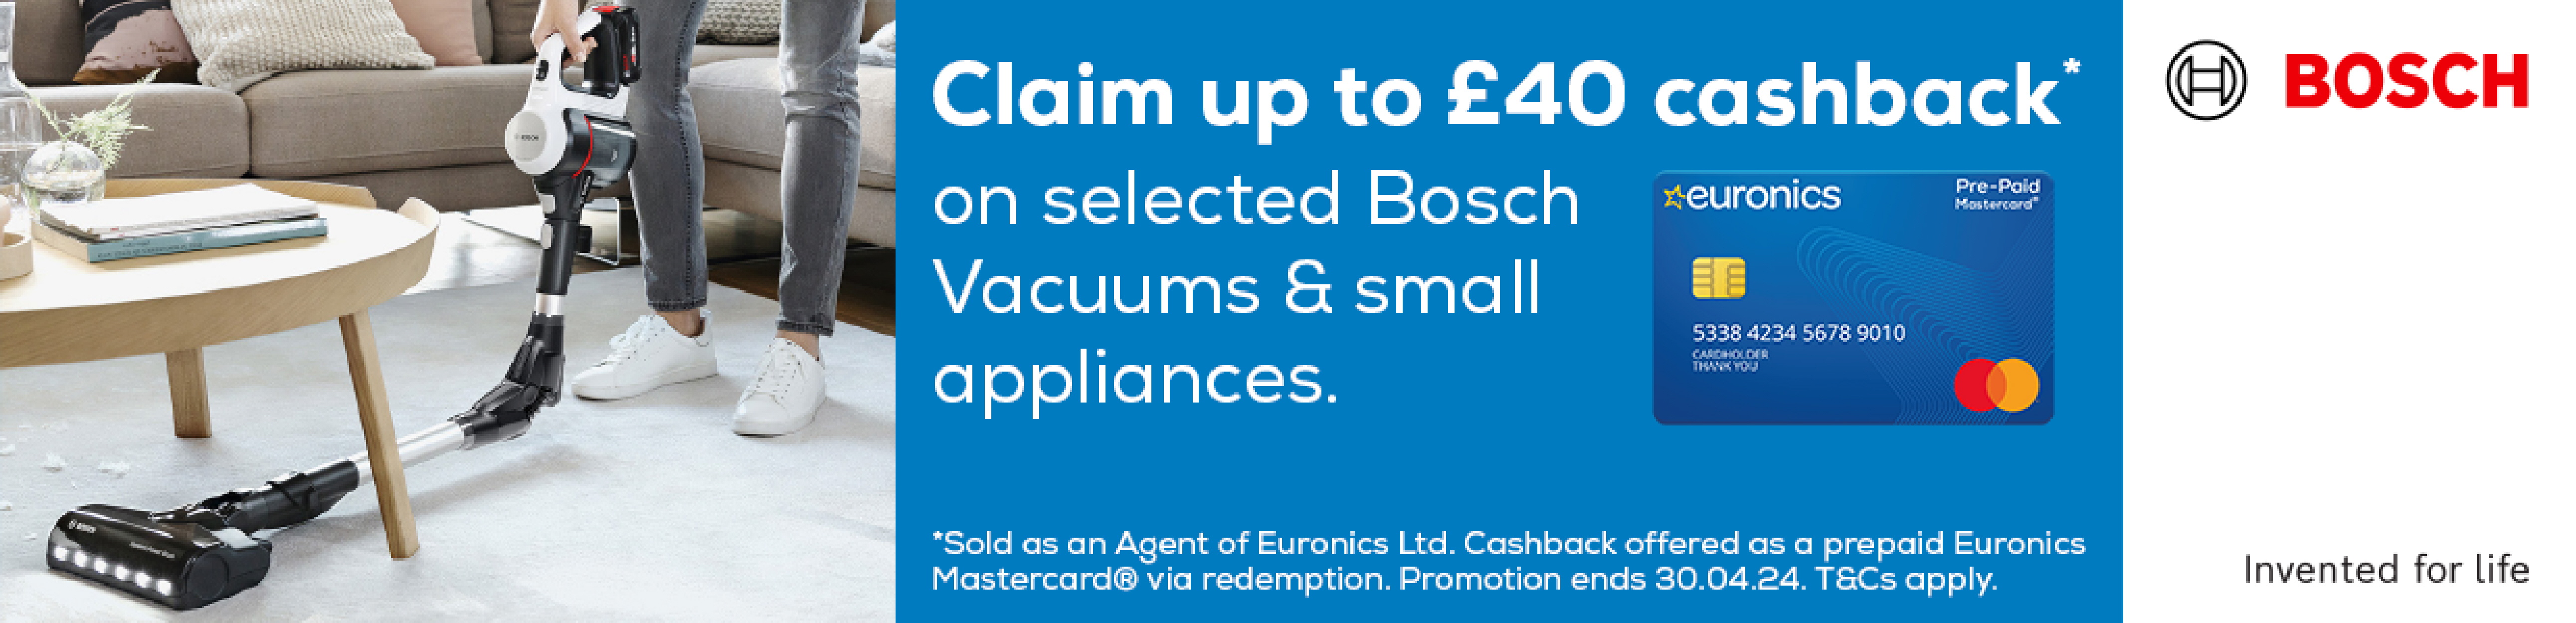 Bosch Vacuum & Small Appliances Promotion